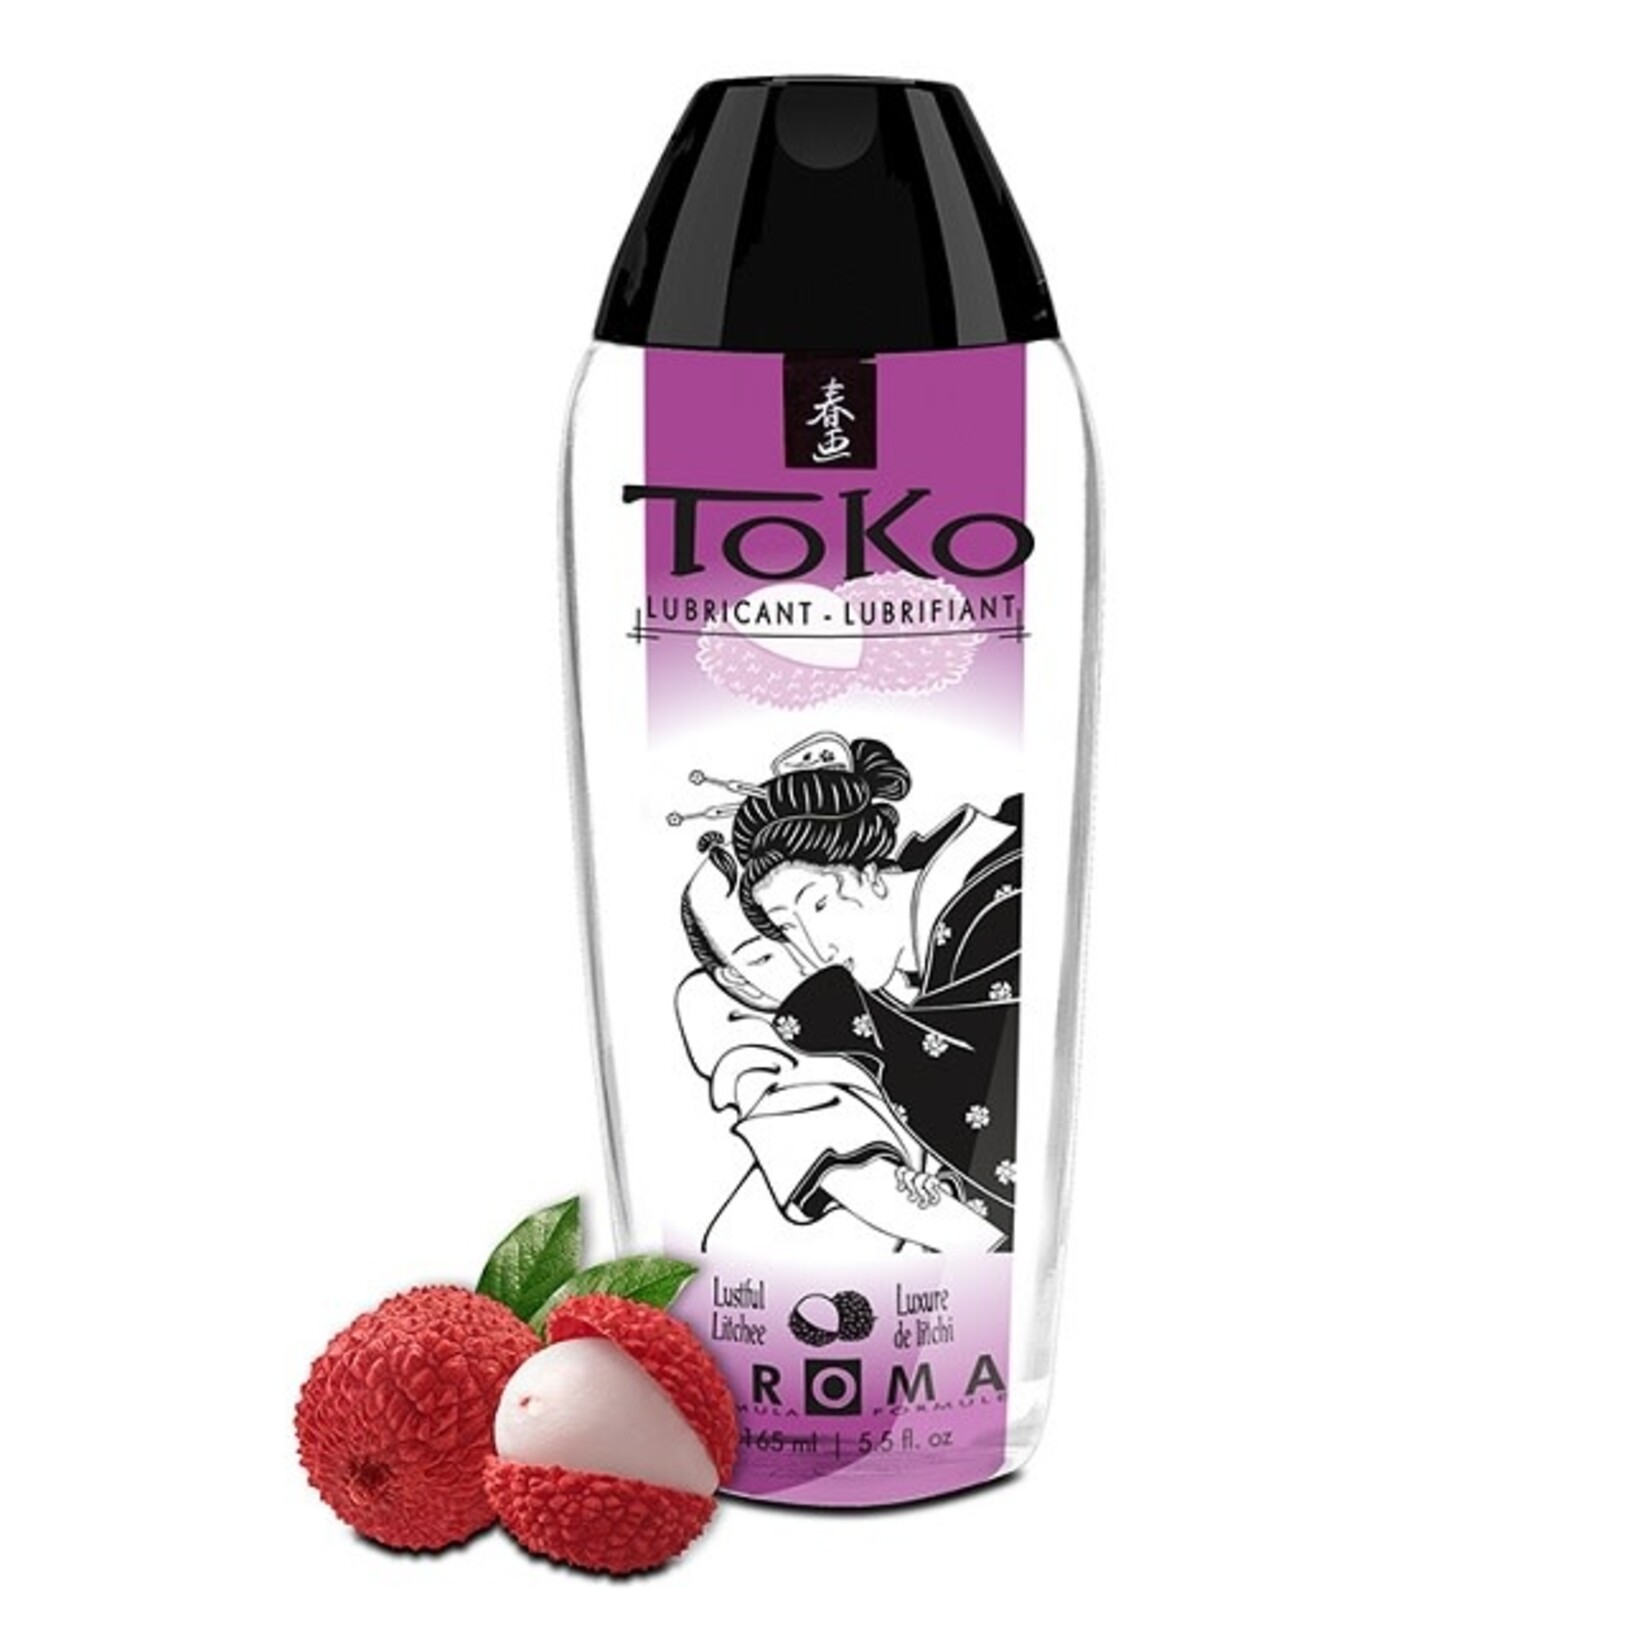 Shunga Erotic Art Toko Aroma Water-Based Lubricant 5.5oz